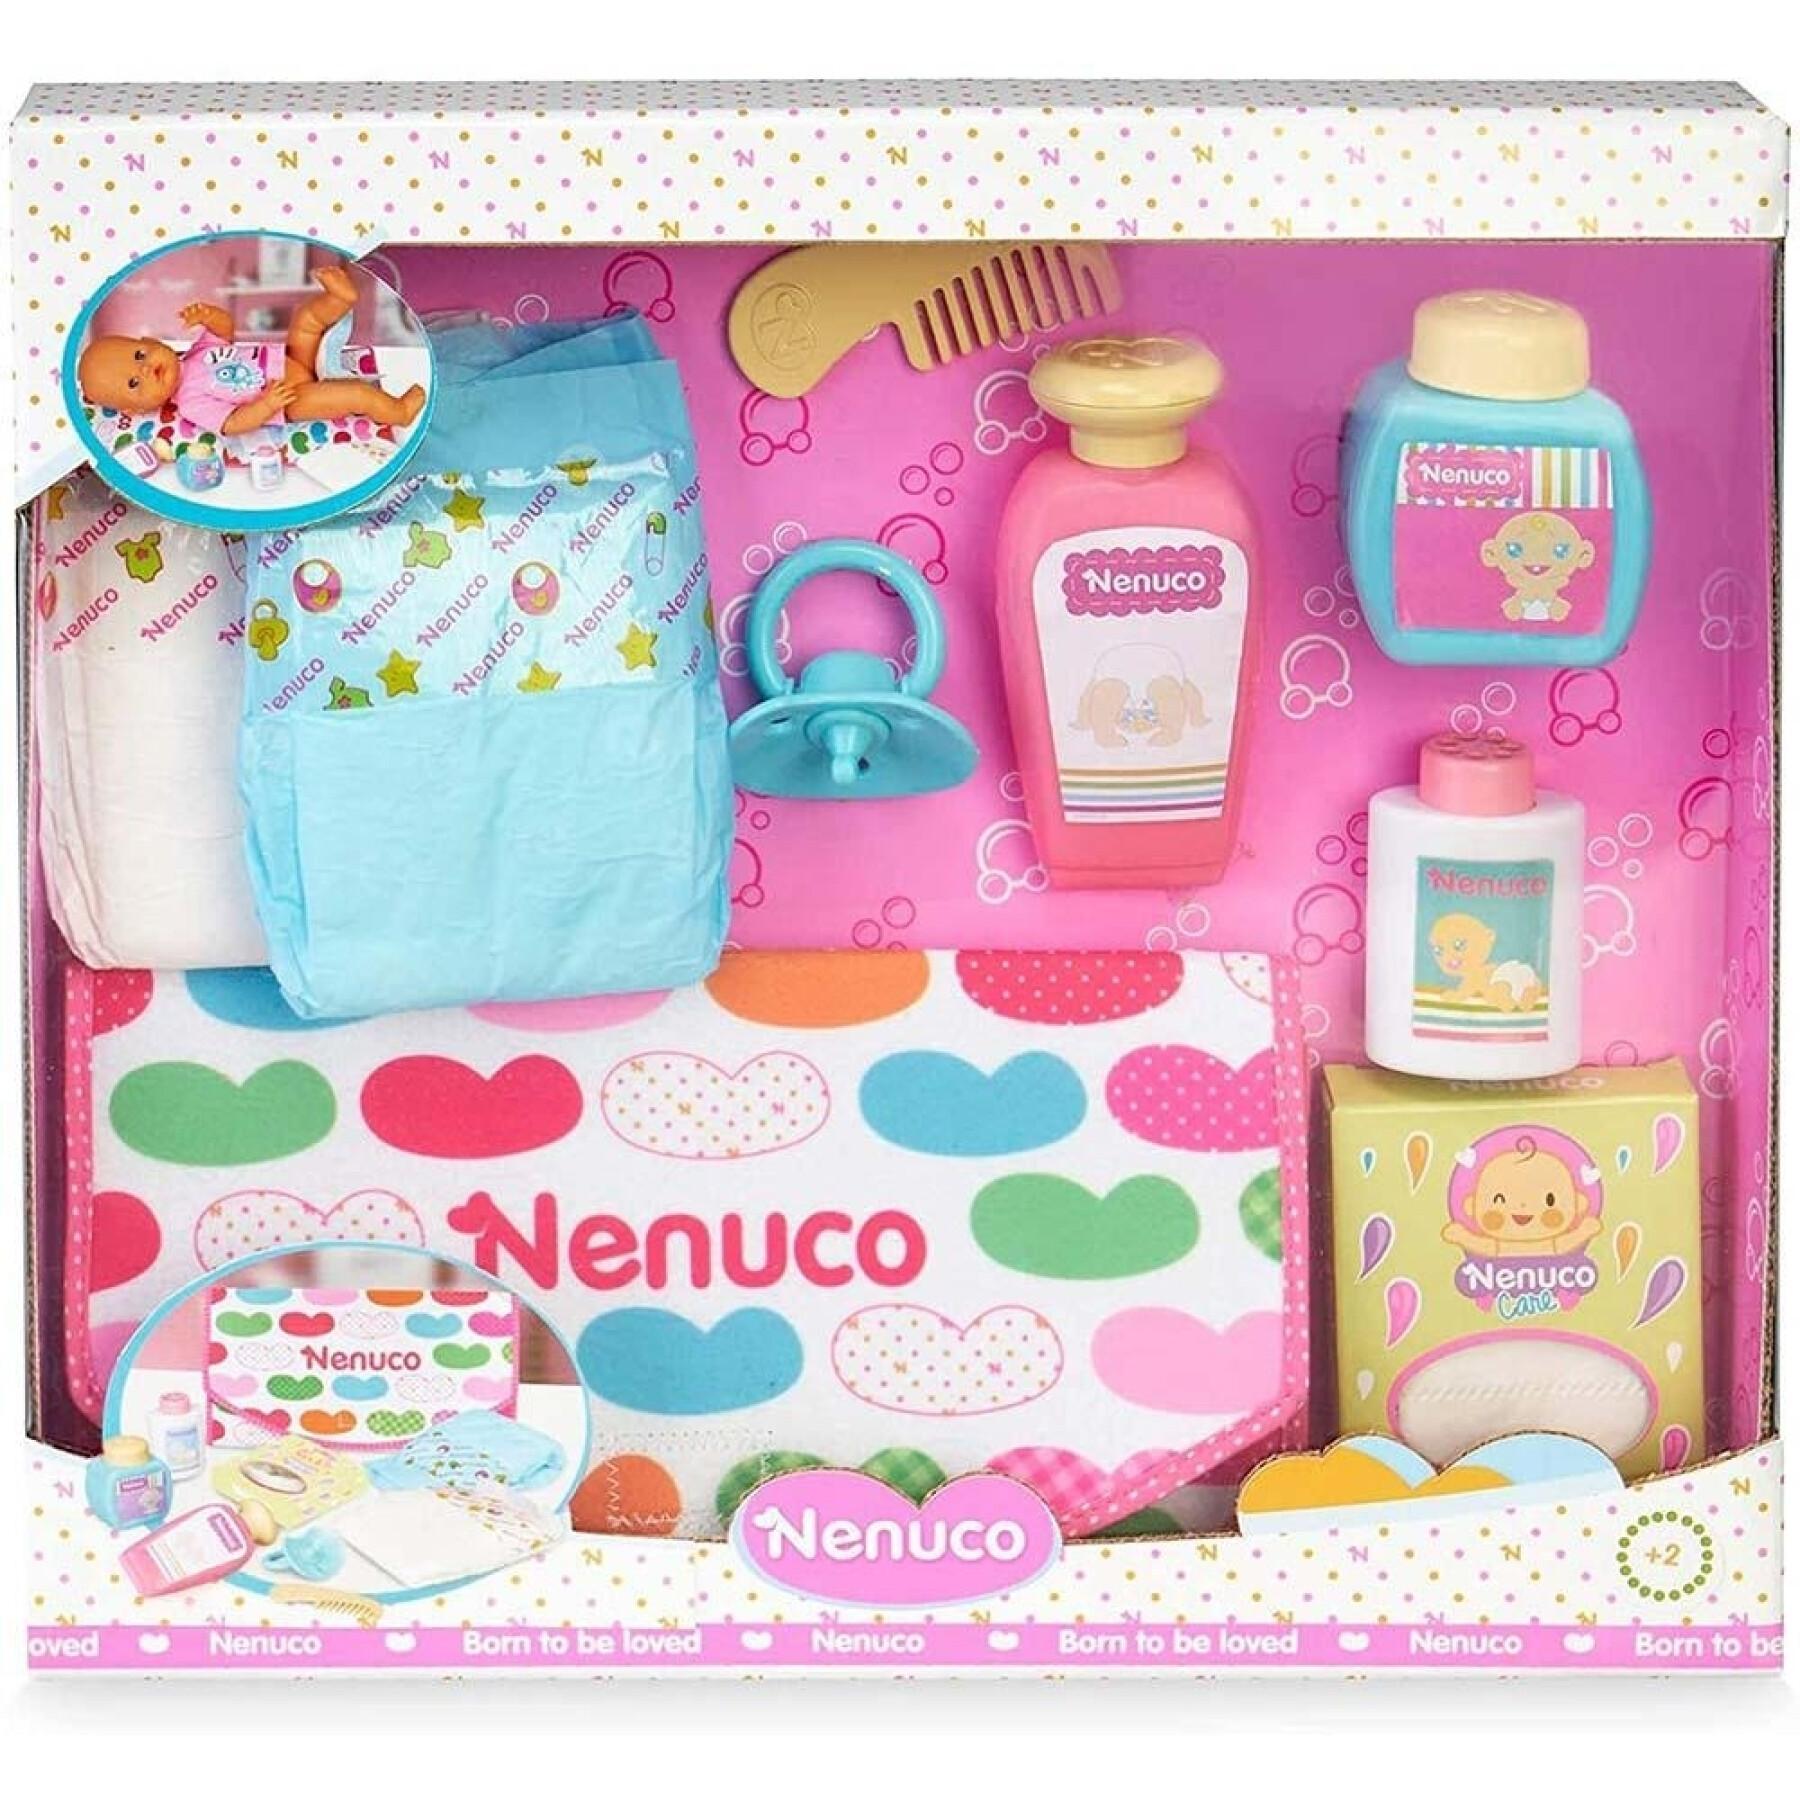 Changing bag accessories Nenuco